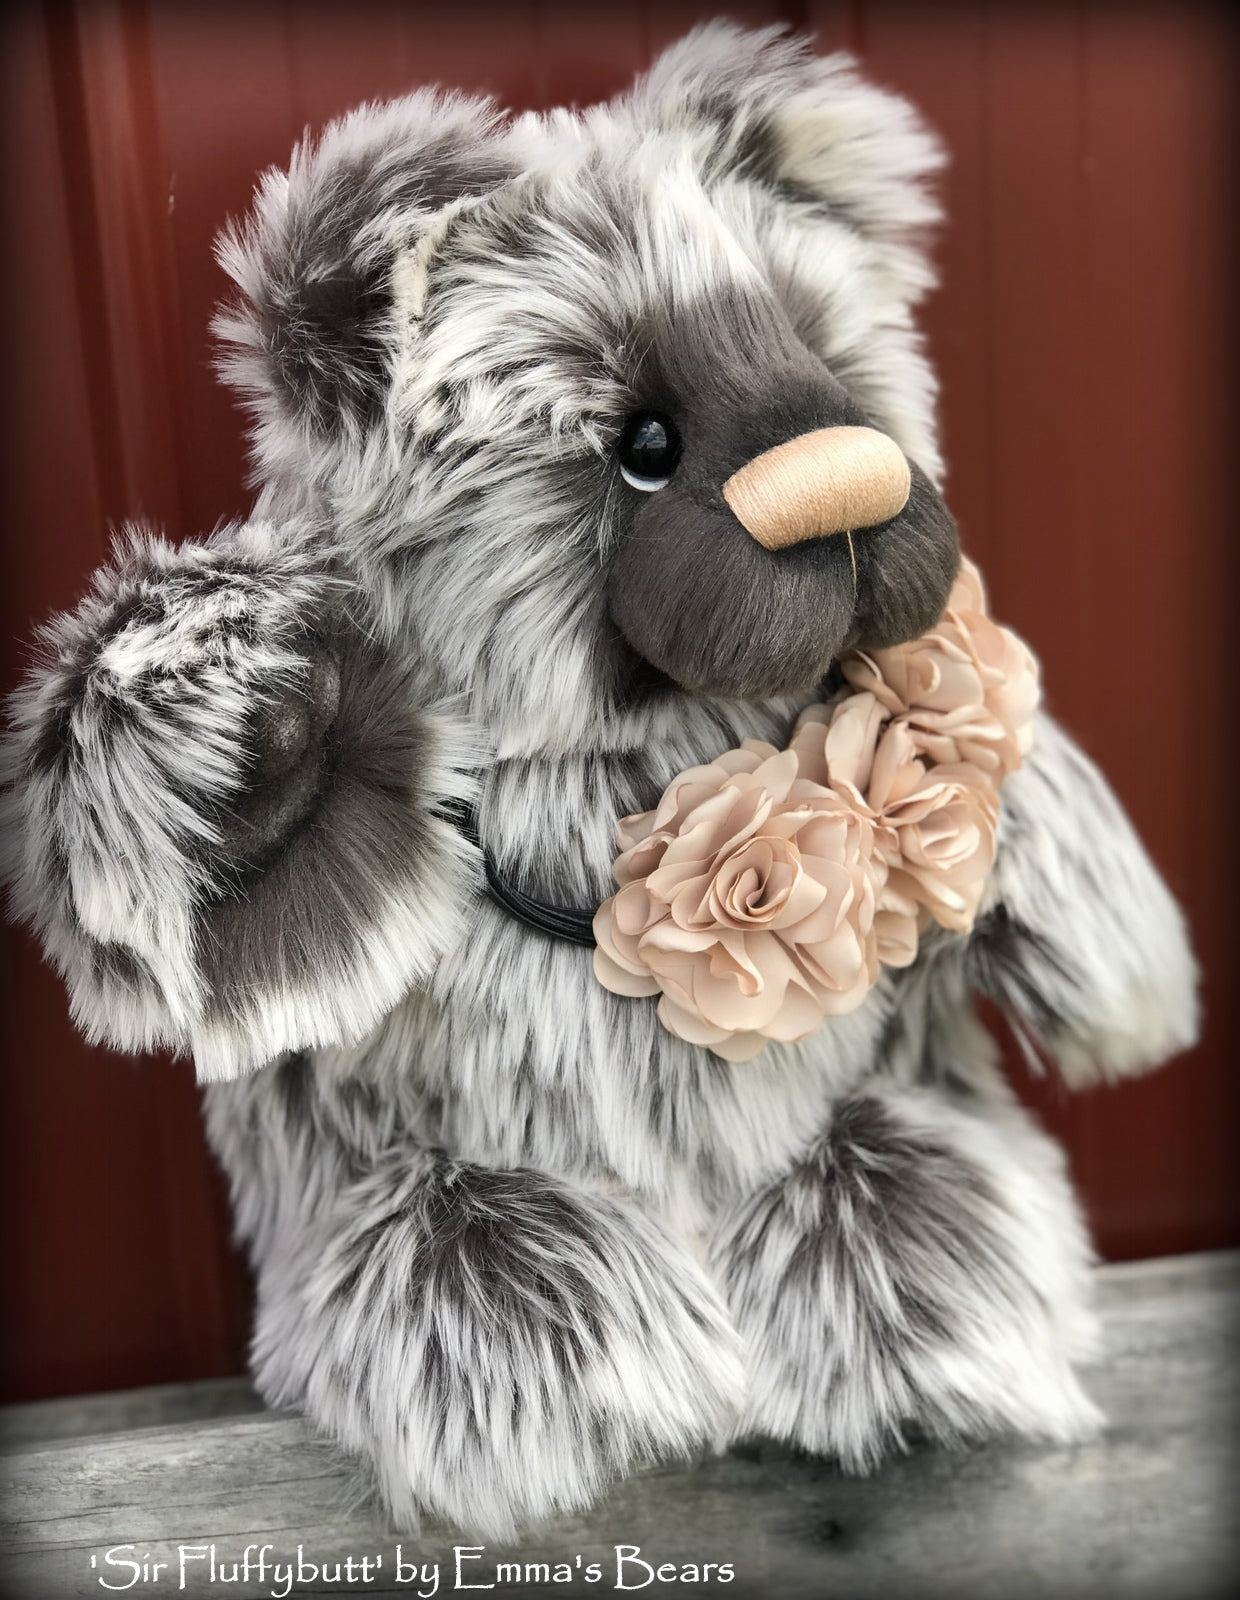 Sir Fluffybutt - 16" faux fur Artist Bear by Emma's Bears - OOAK